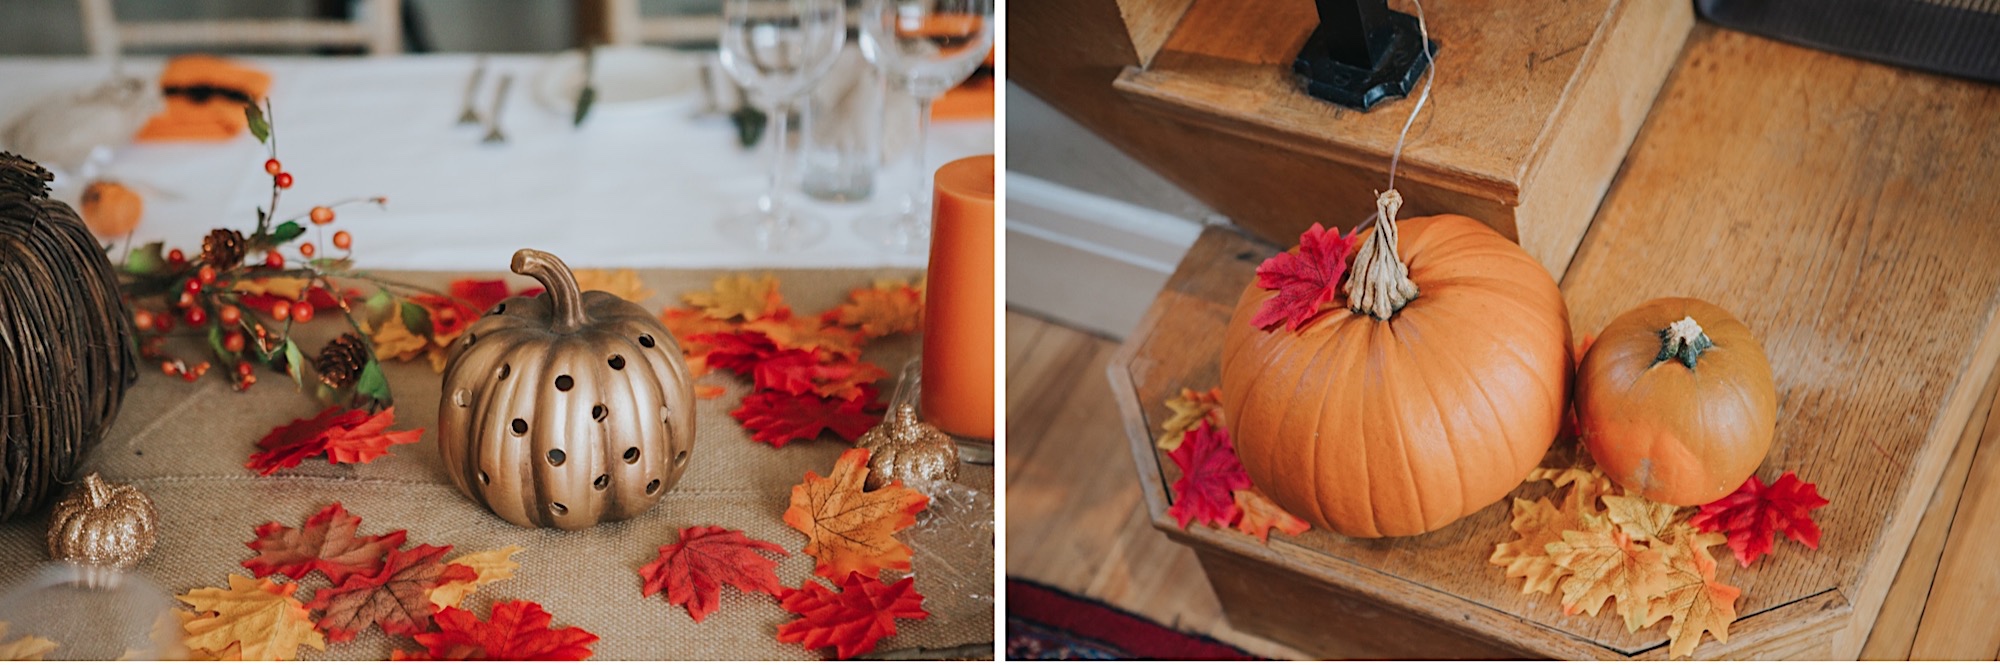 halloween wedding details table set up with pumpkins